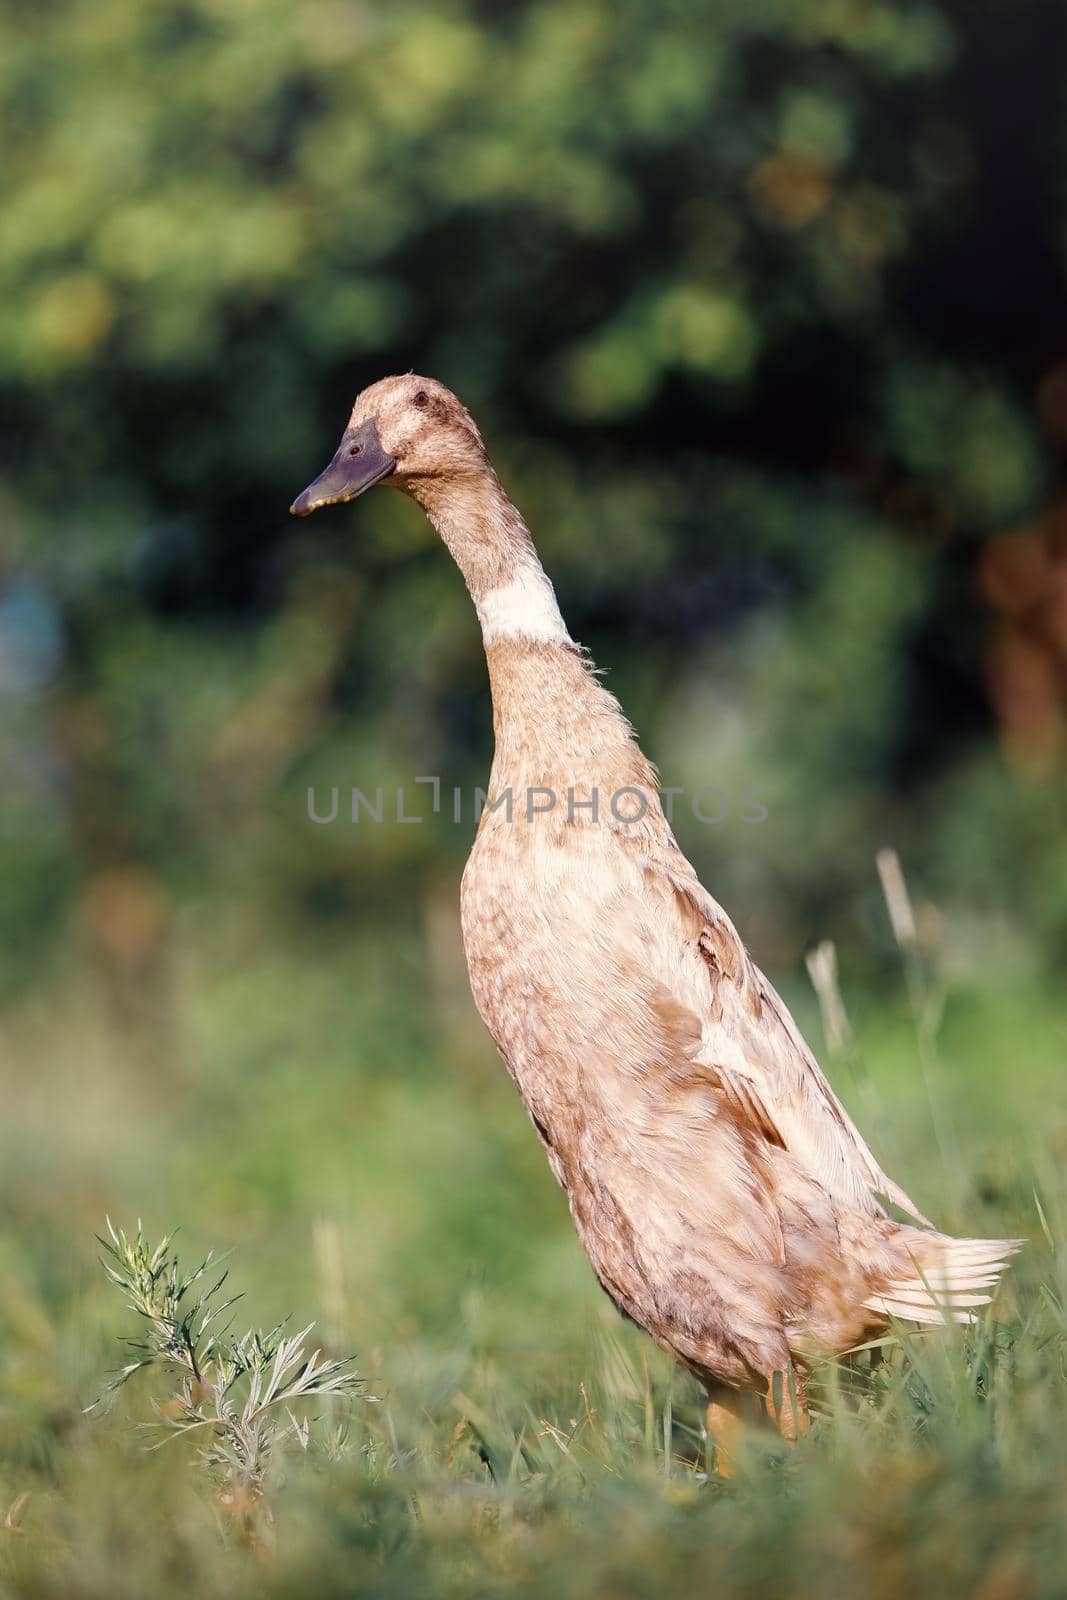 Brown Indian runner duck, free range, in the garden by Lincikas